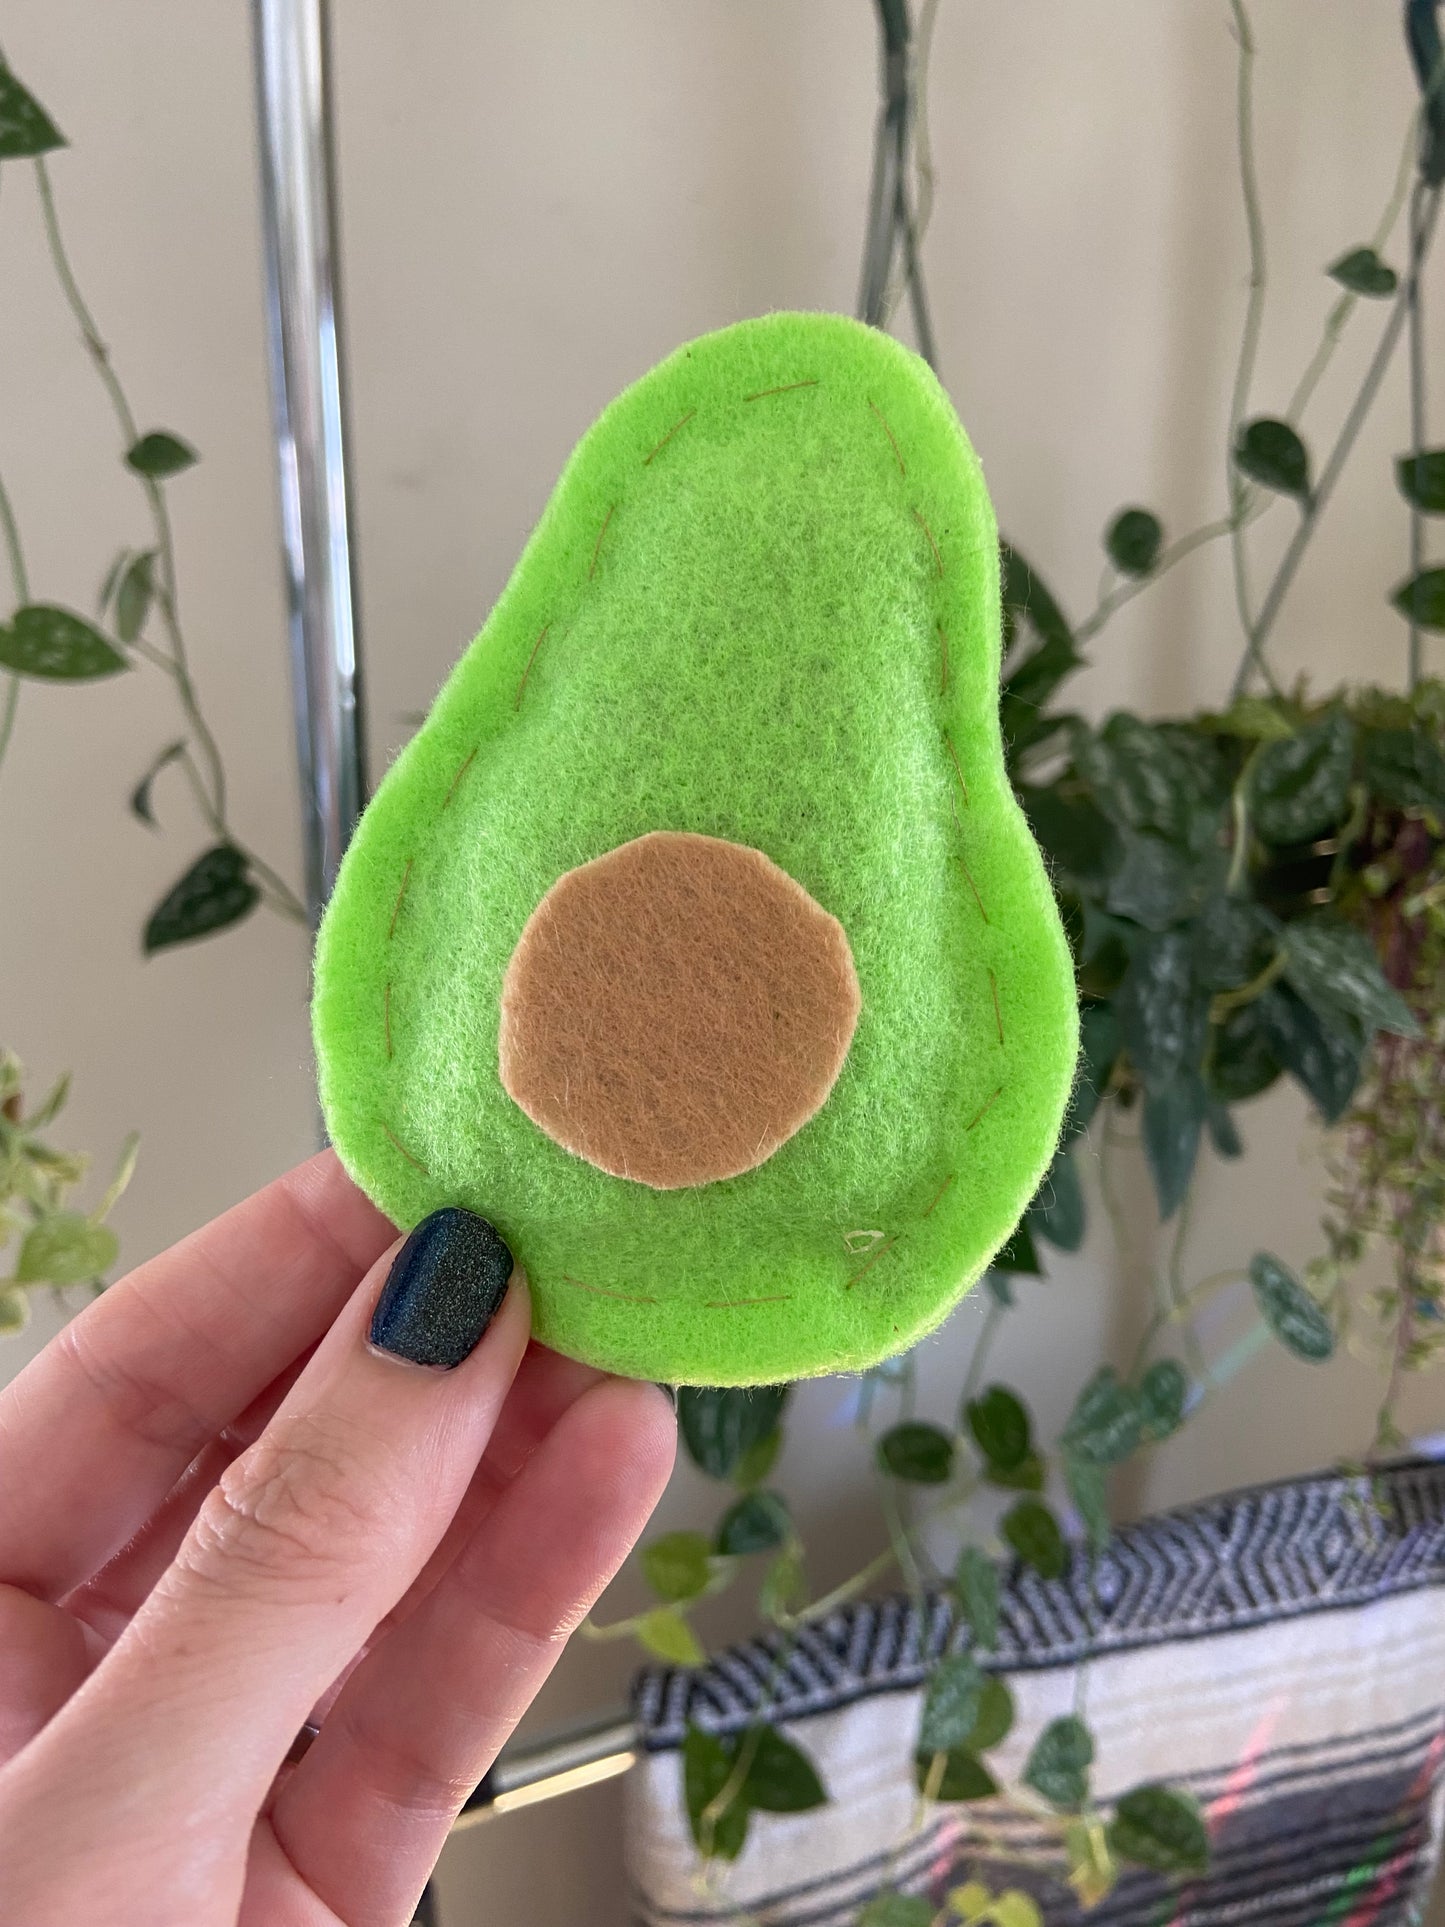 Avocado catnip toy